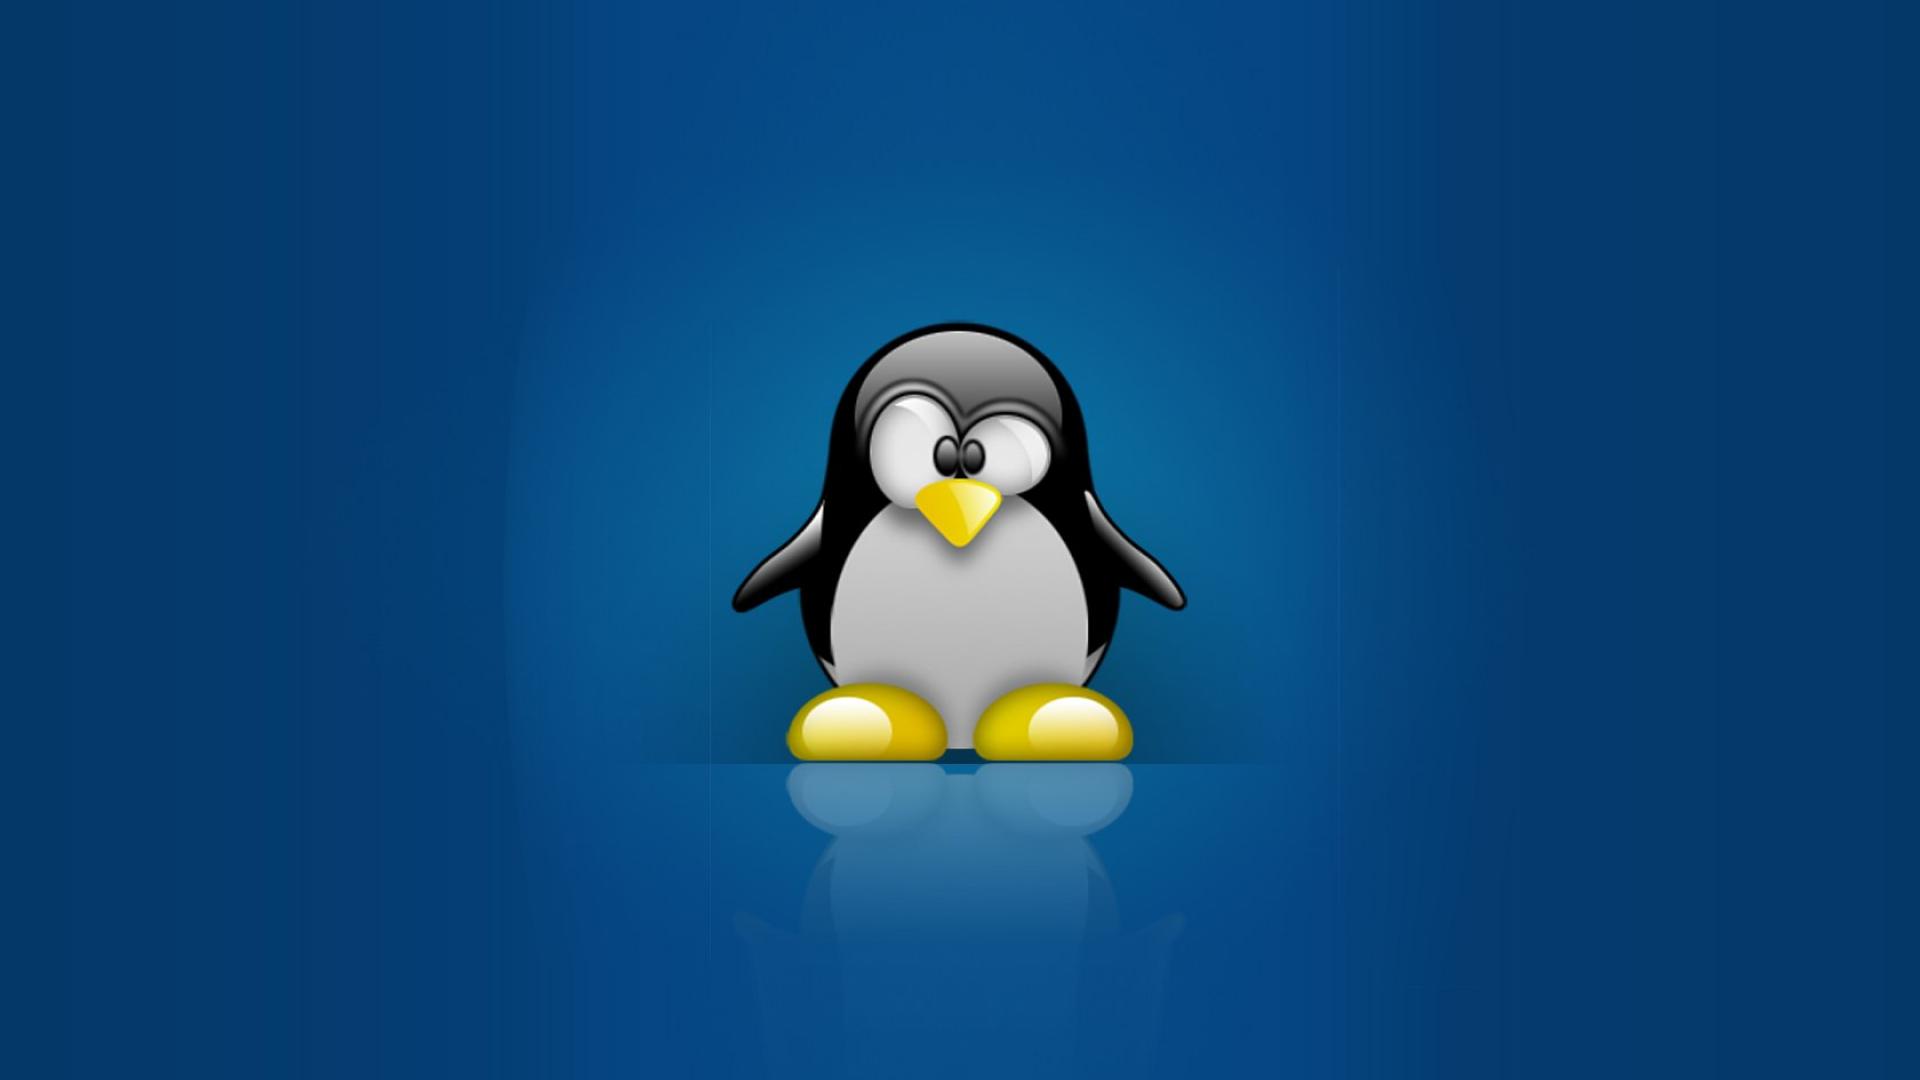 Linux tux penguins computer hd wallpaper - - HQ Desktop